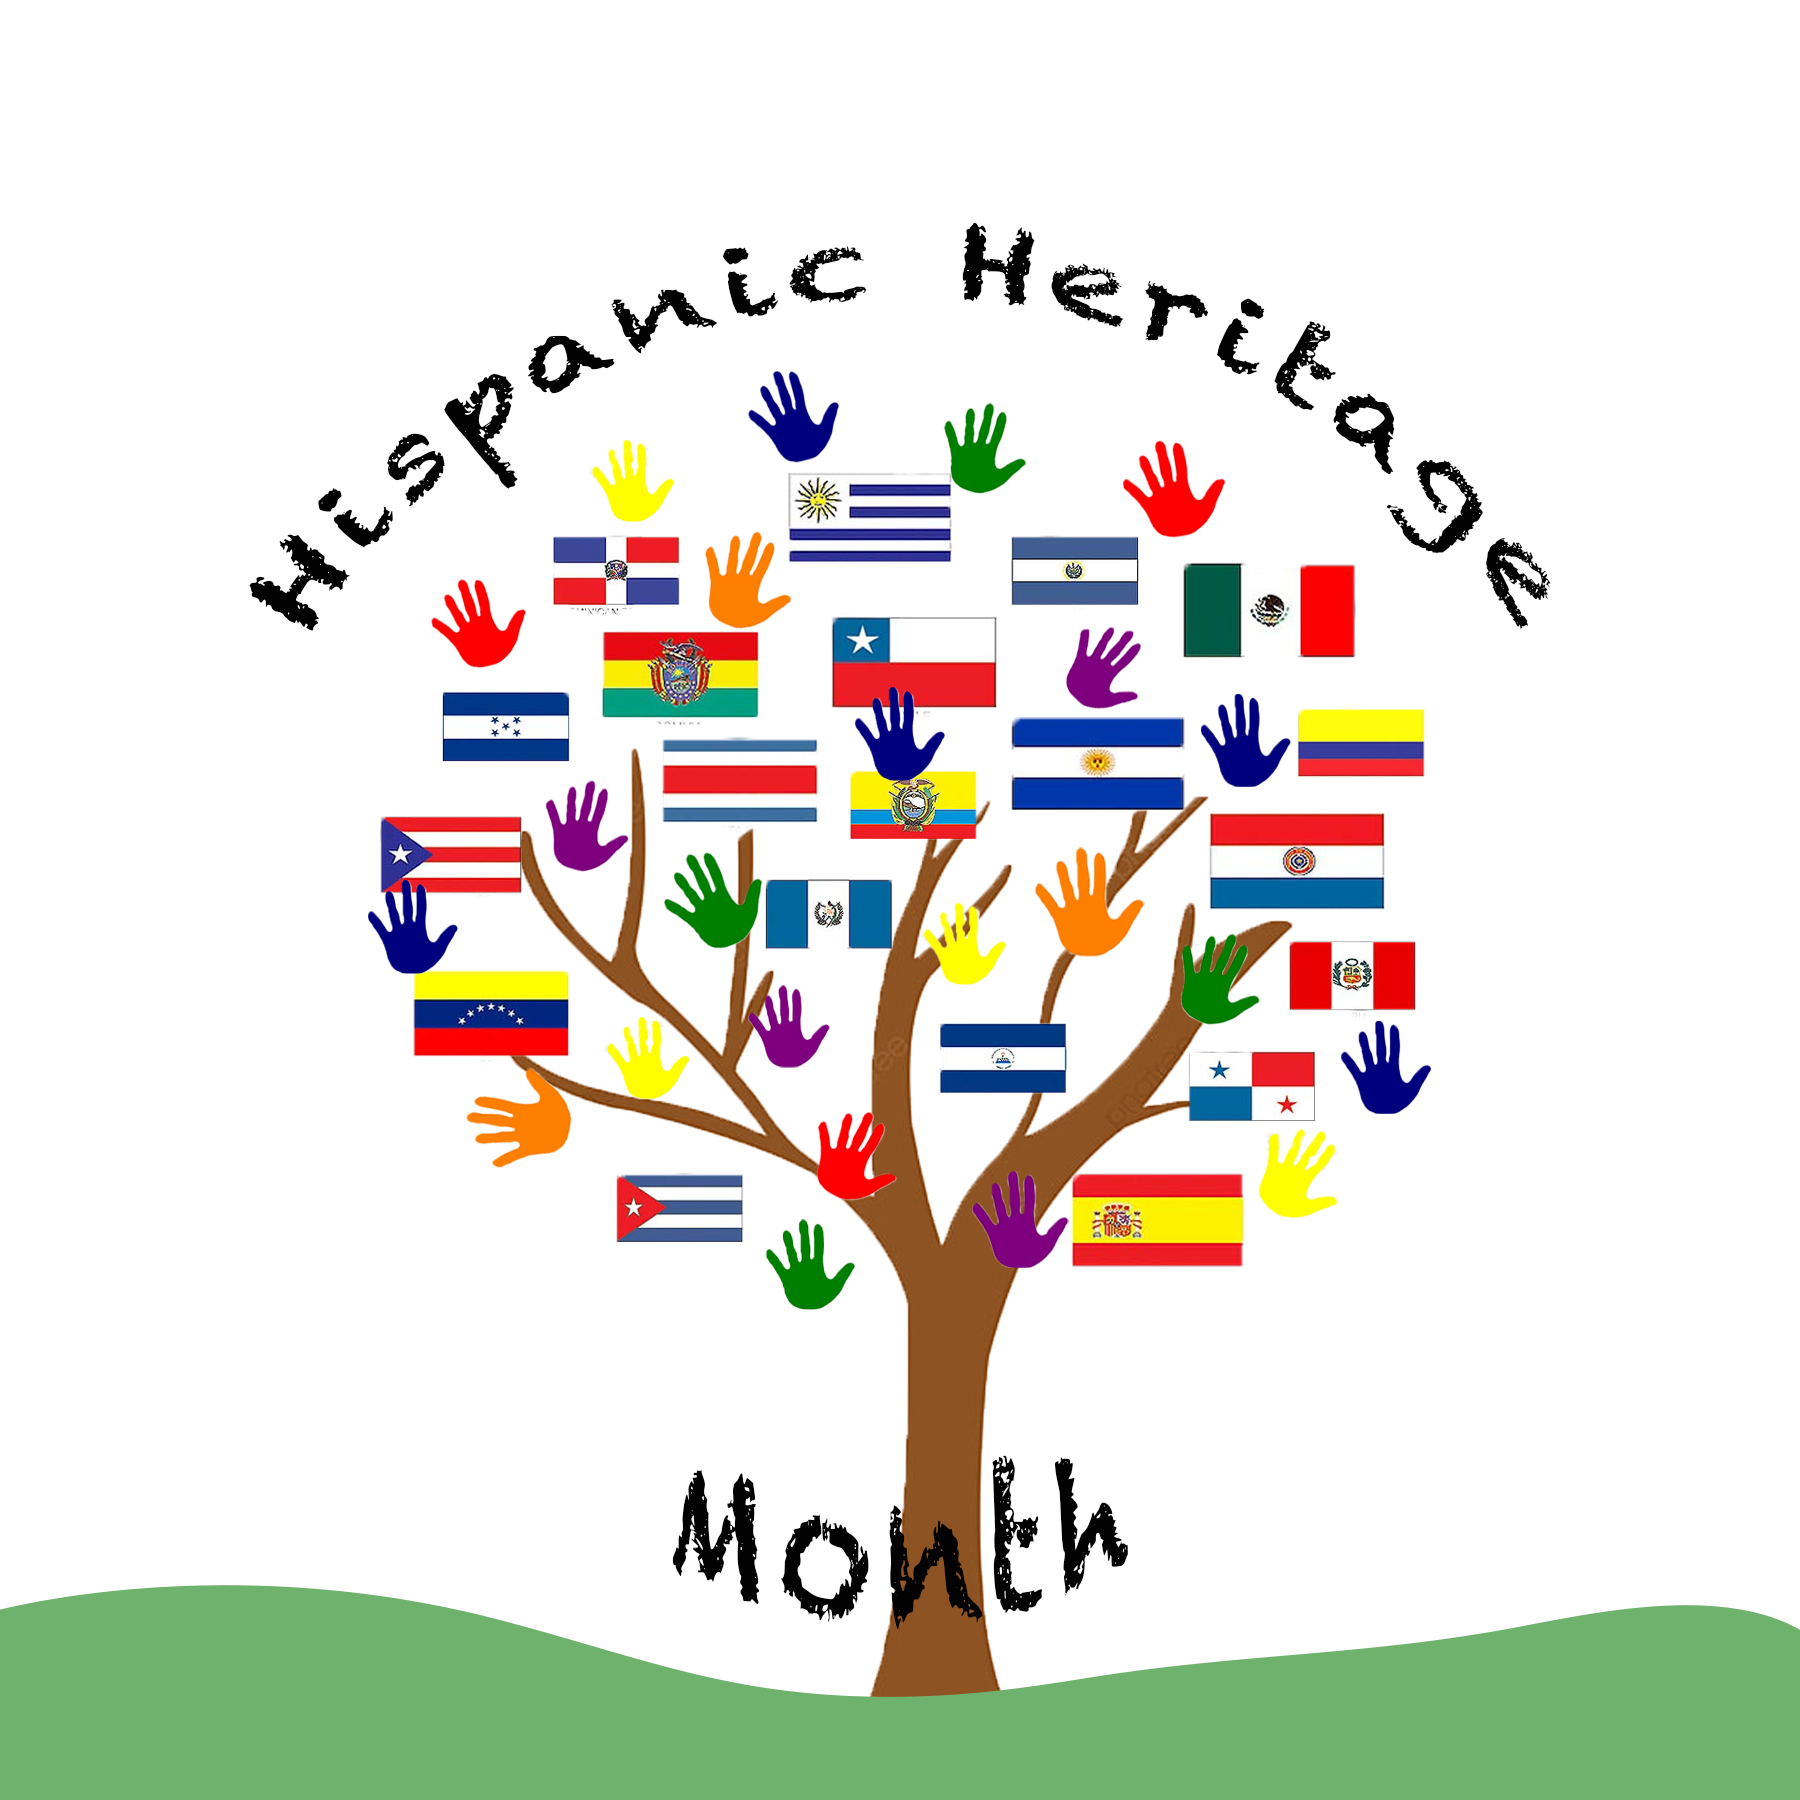 Hispanic Heritage Month Printable Poster